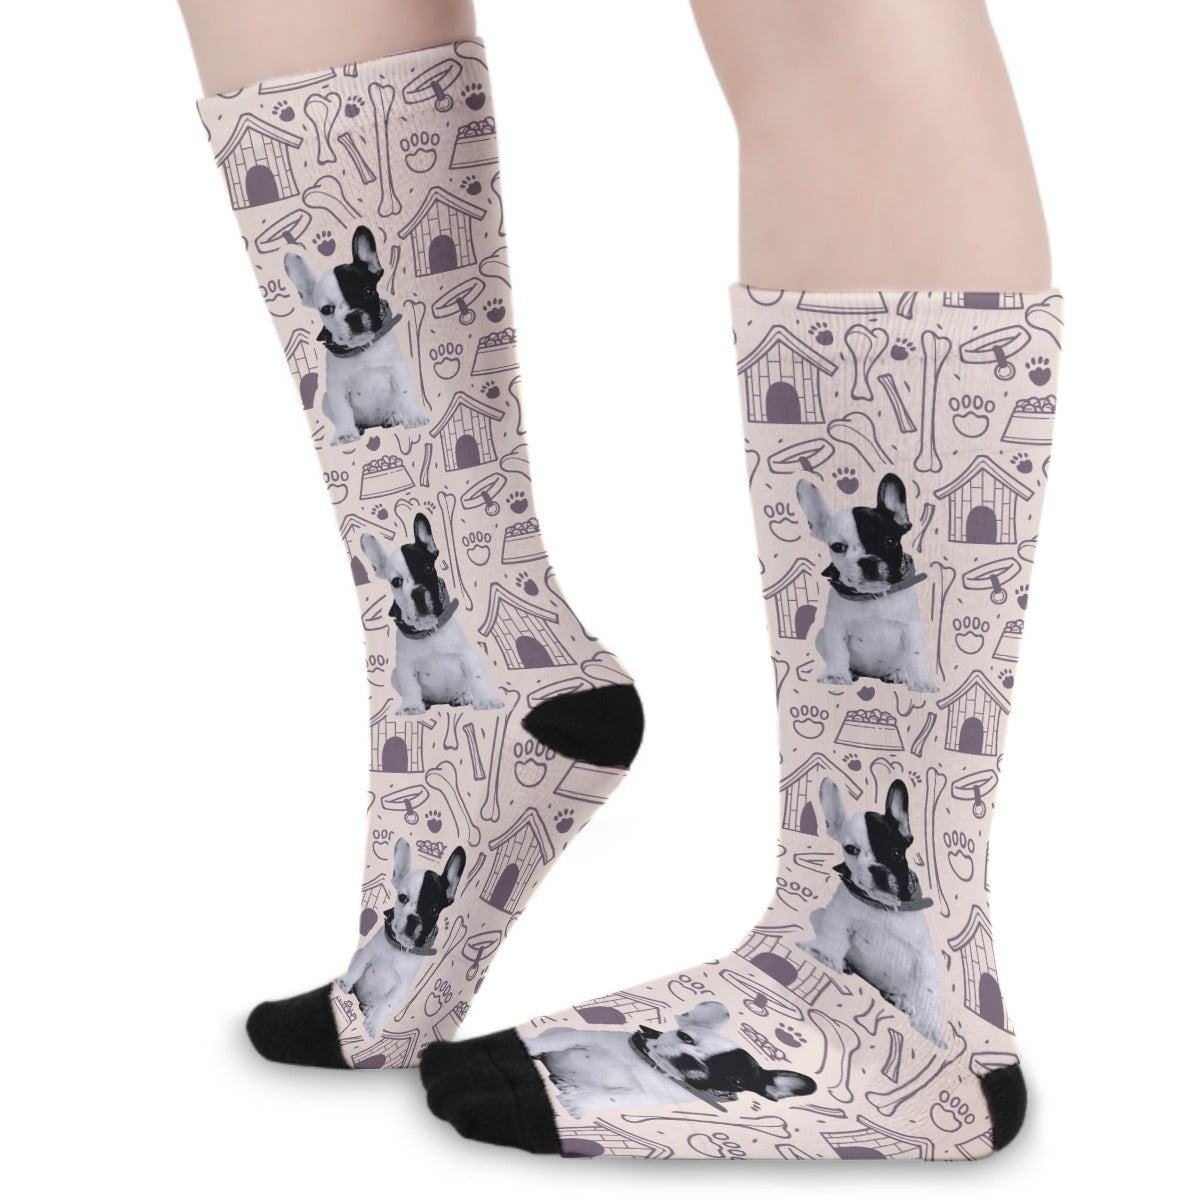 Custom socks  with Frenchie Photo